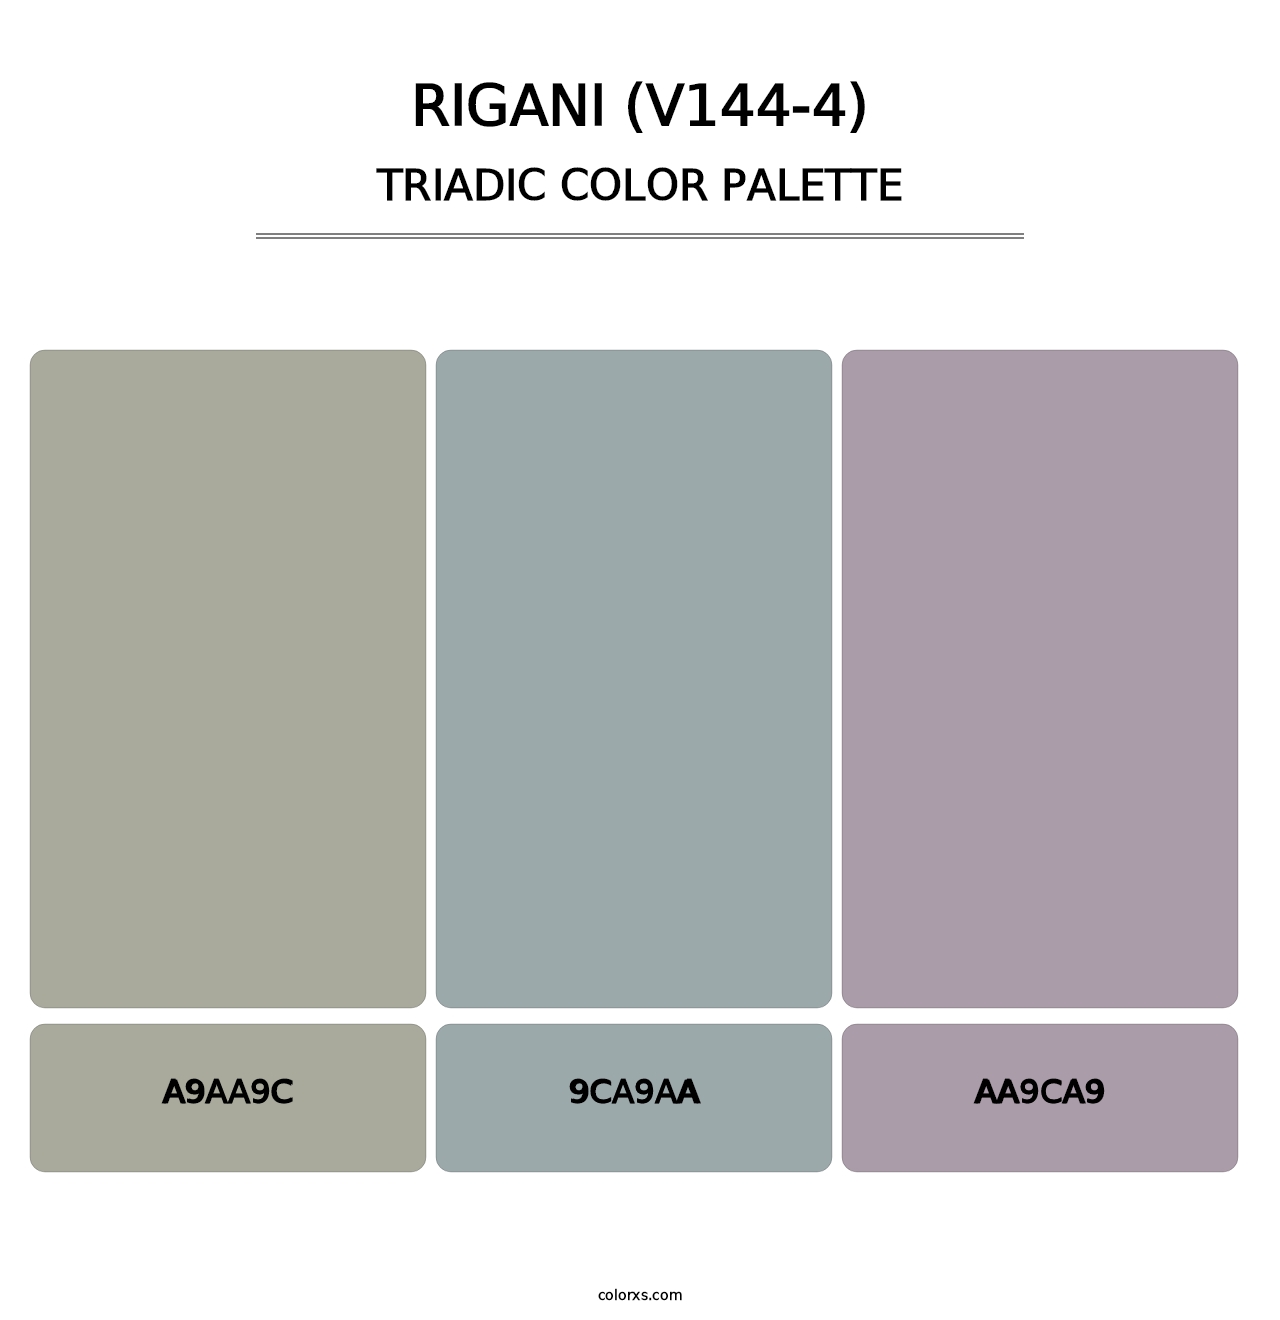 Rigani (V144-4) - Triadic Color Palette